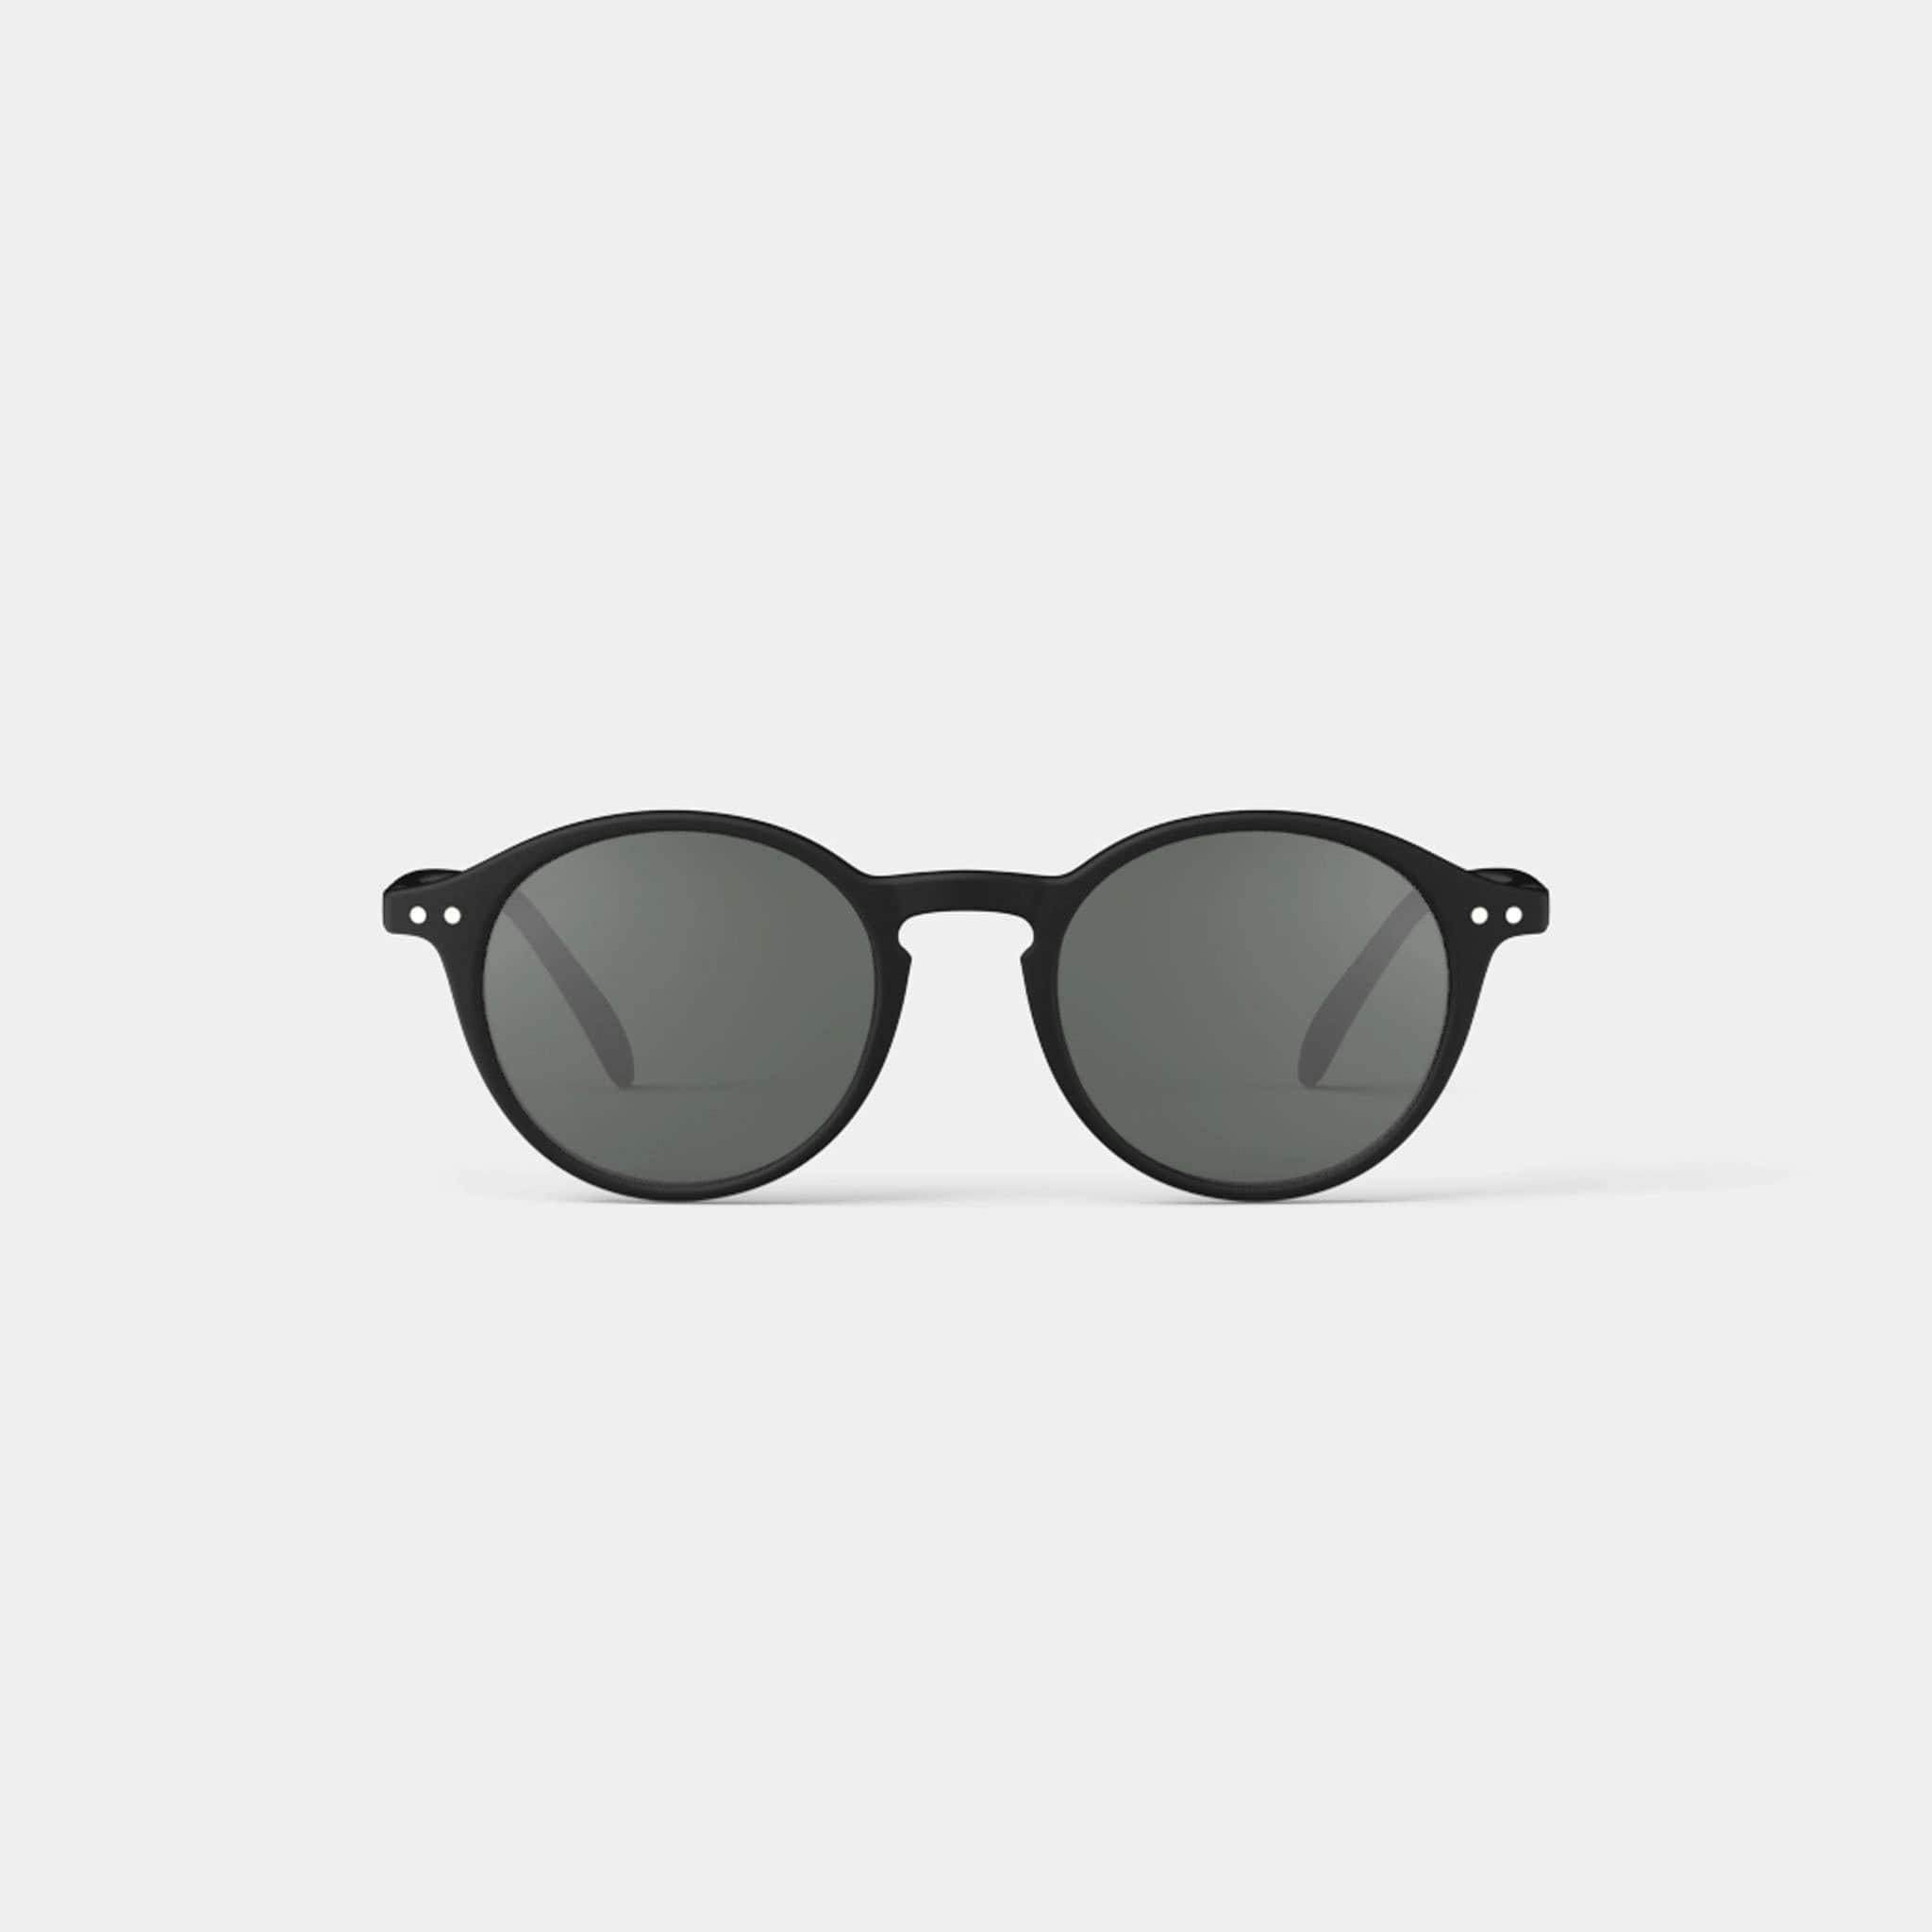 IZIPIZI #D Sunglasses Black Polarized SUNGLASSES  - ZIGZAG Footwear